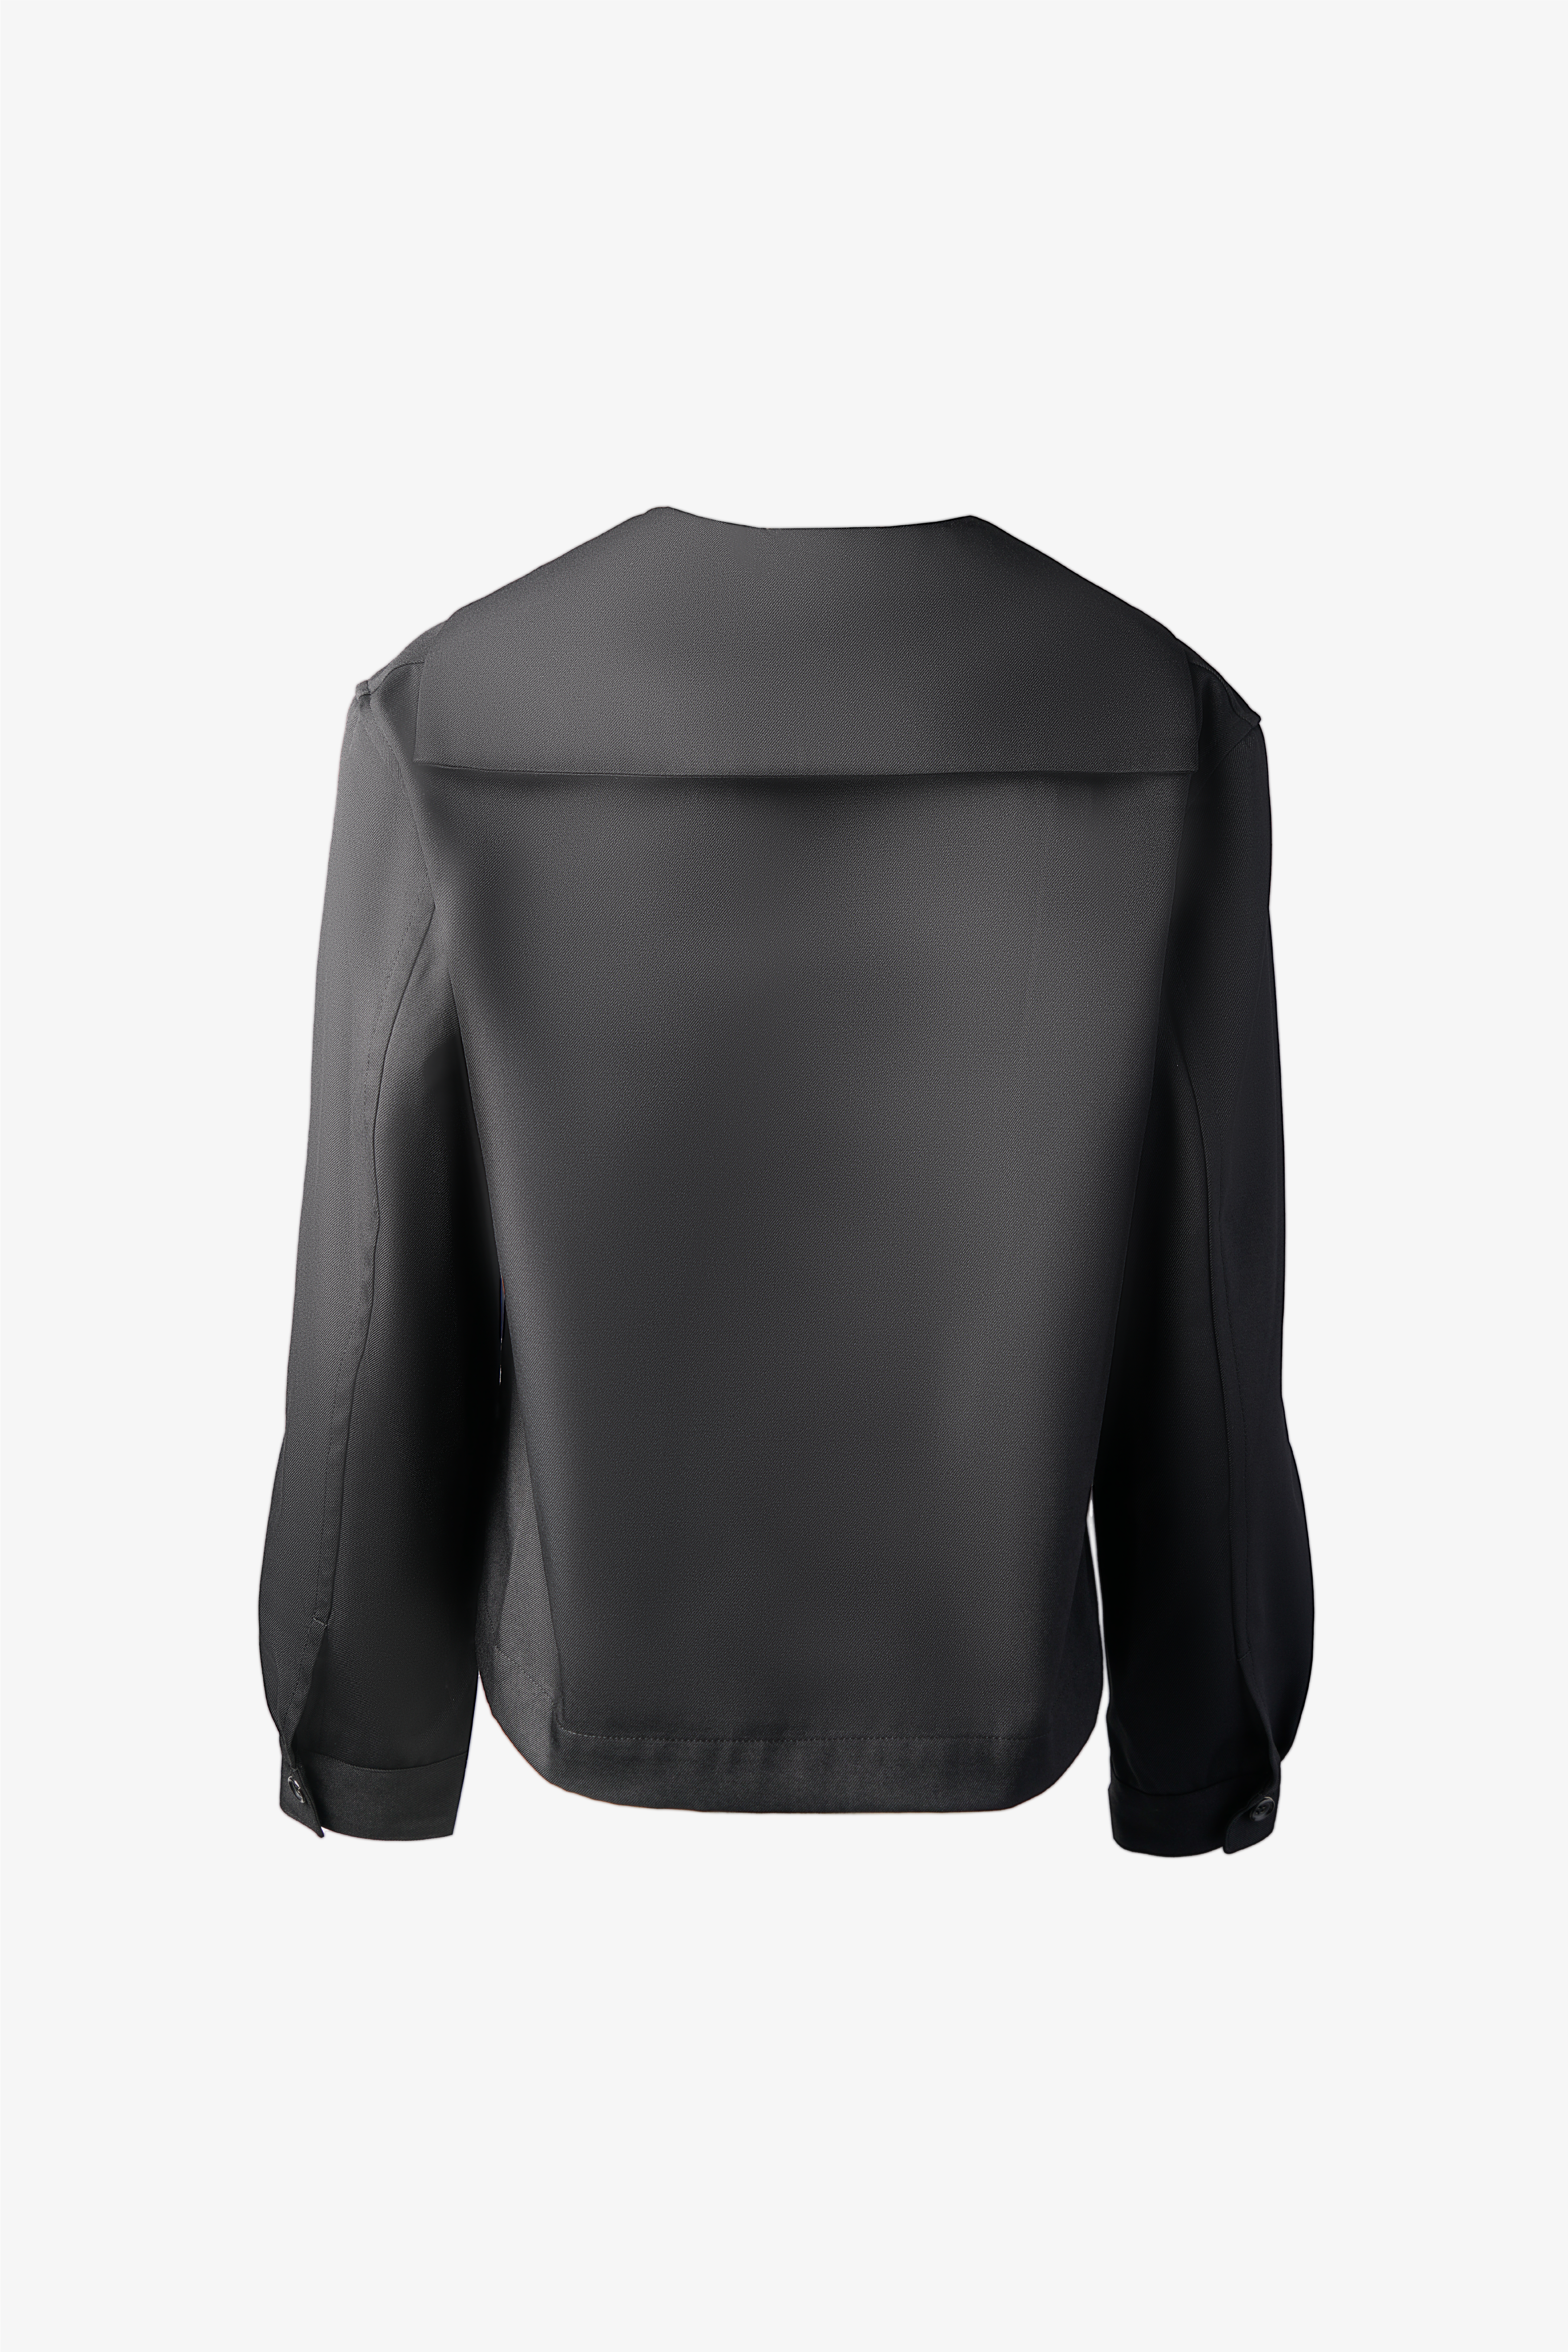 Selectshop FRAME - COMME DES GARÇONS GIRL Nylon Jacket Outerwear Dubai